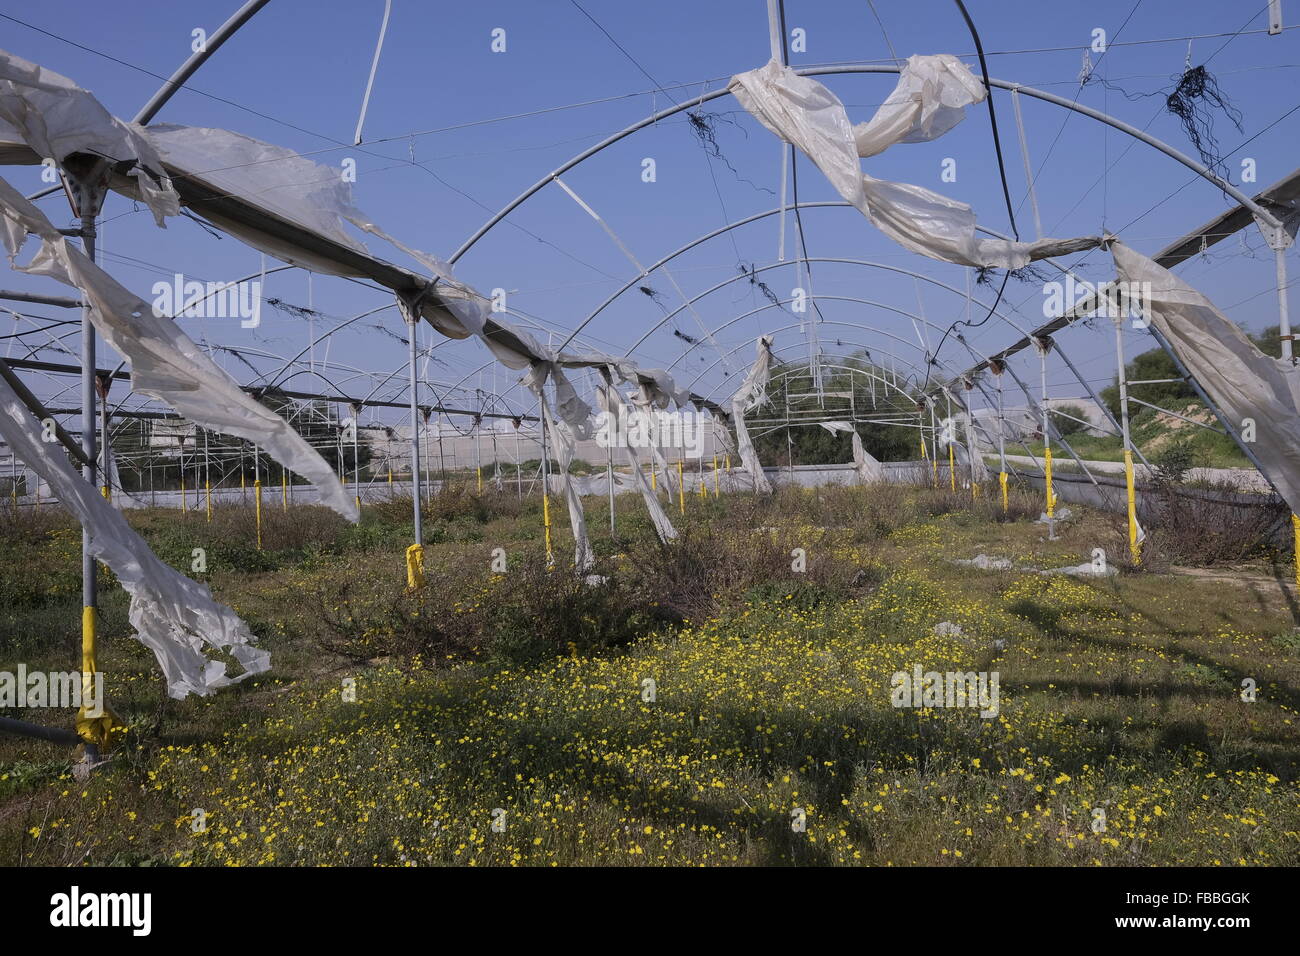 An abandoned greenhouse in Moshav Netiv Haasarah Israeli community settlement near norther Gaza border Israel Stock Photo